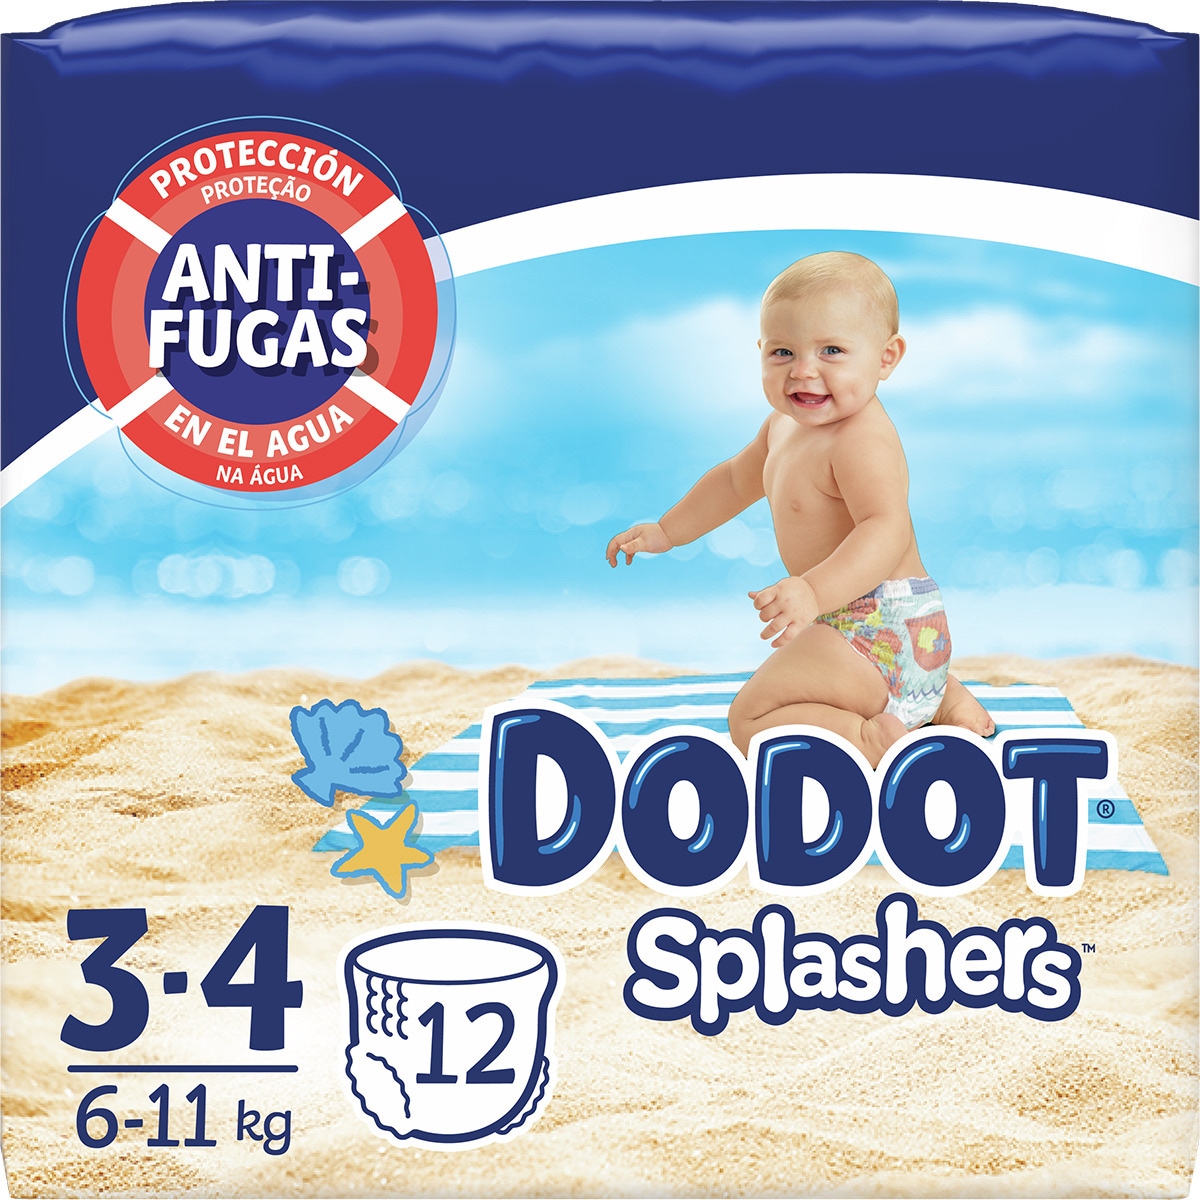 Dodot - Dodot Splashers Pañales Bebé, Tallas 3,4,5.